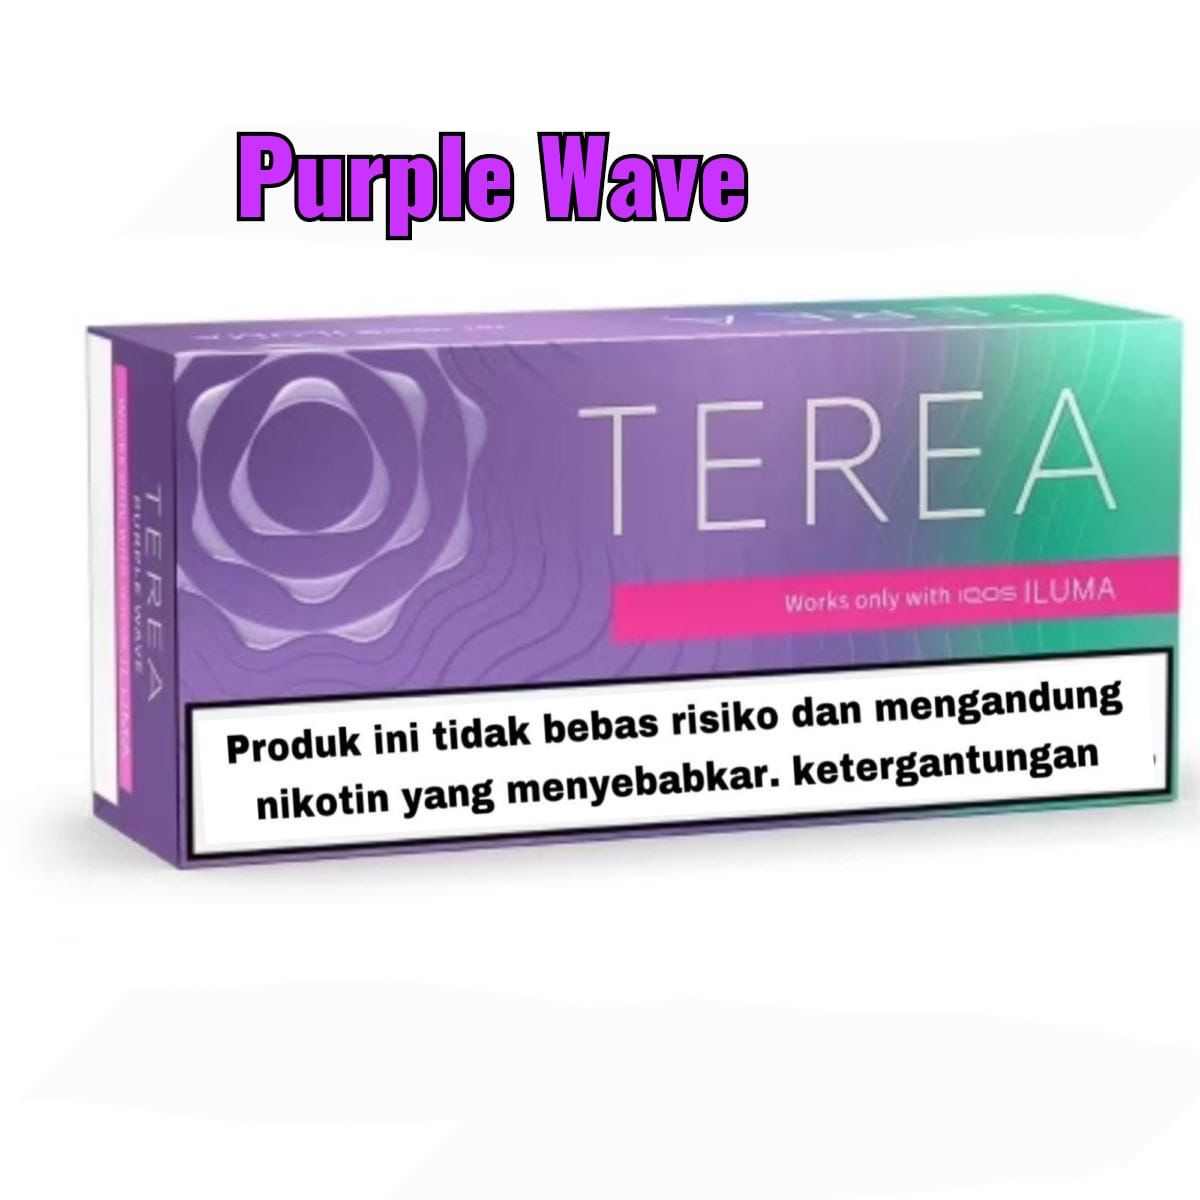 New IQOS Terea Purple Wave Indonesian Best Price in UAE